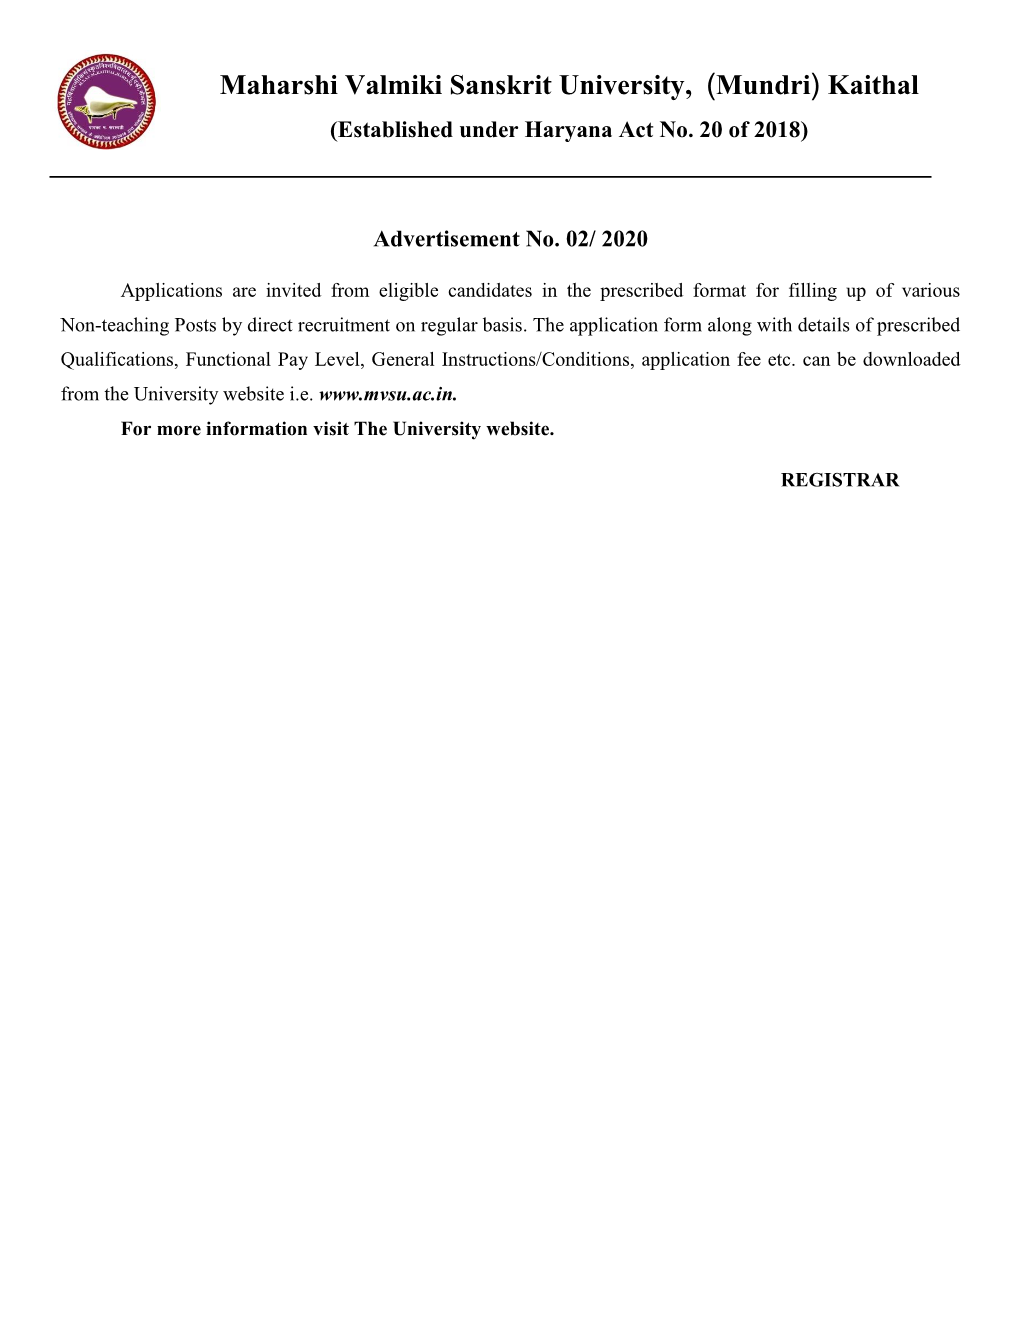 Maharshi Valmiki Sanskrit University, (Mundri) Kaithal (Established Under Haryana Act No